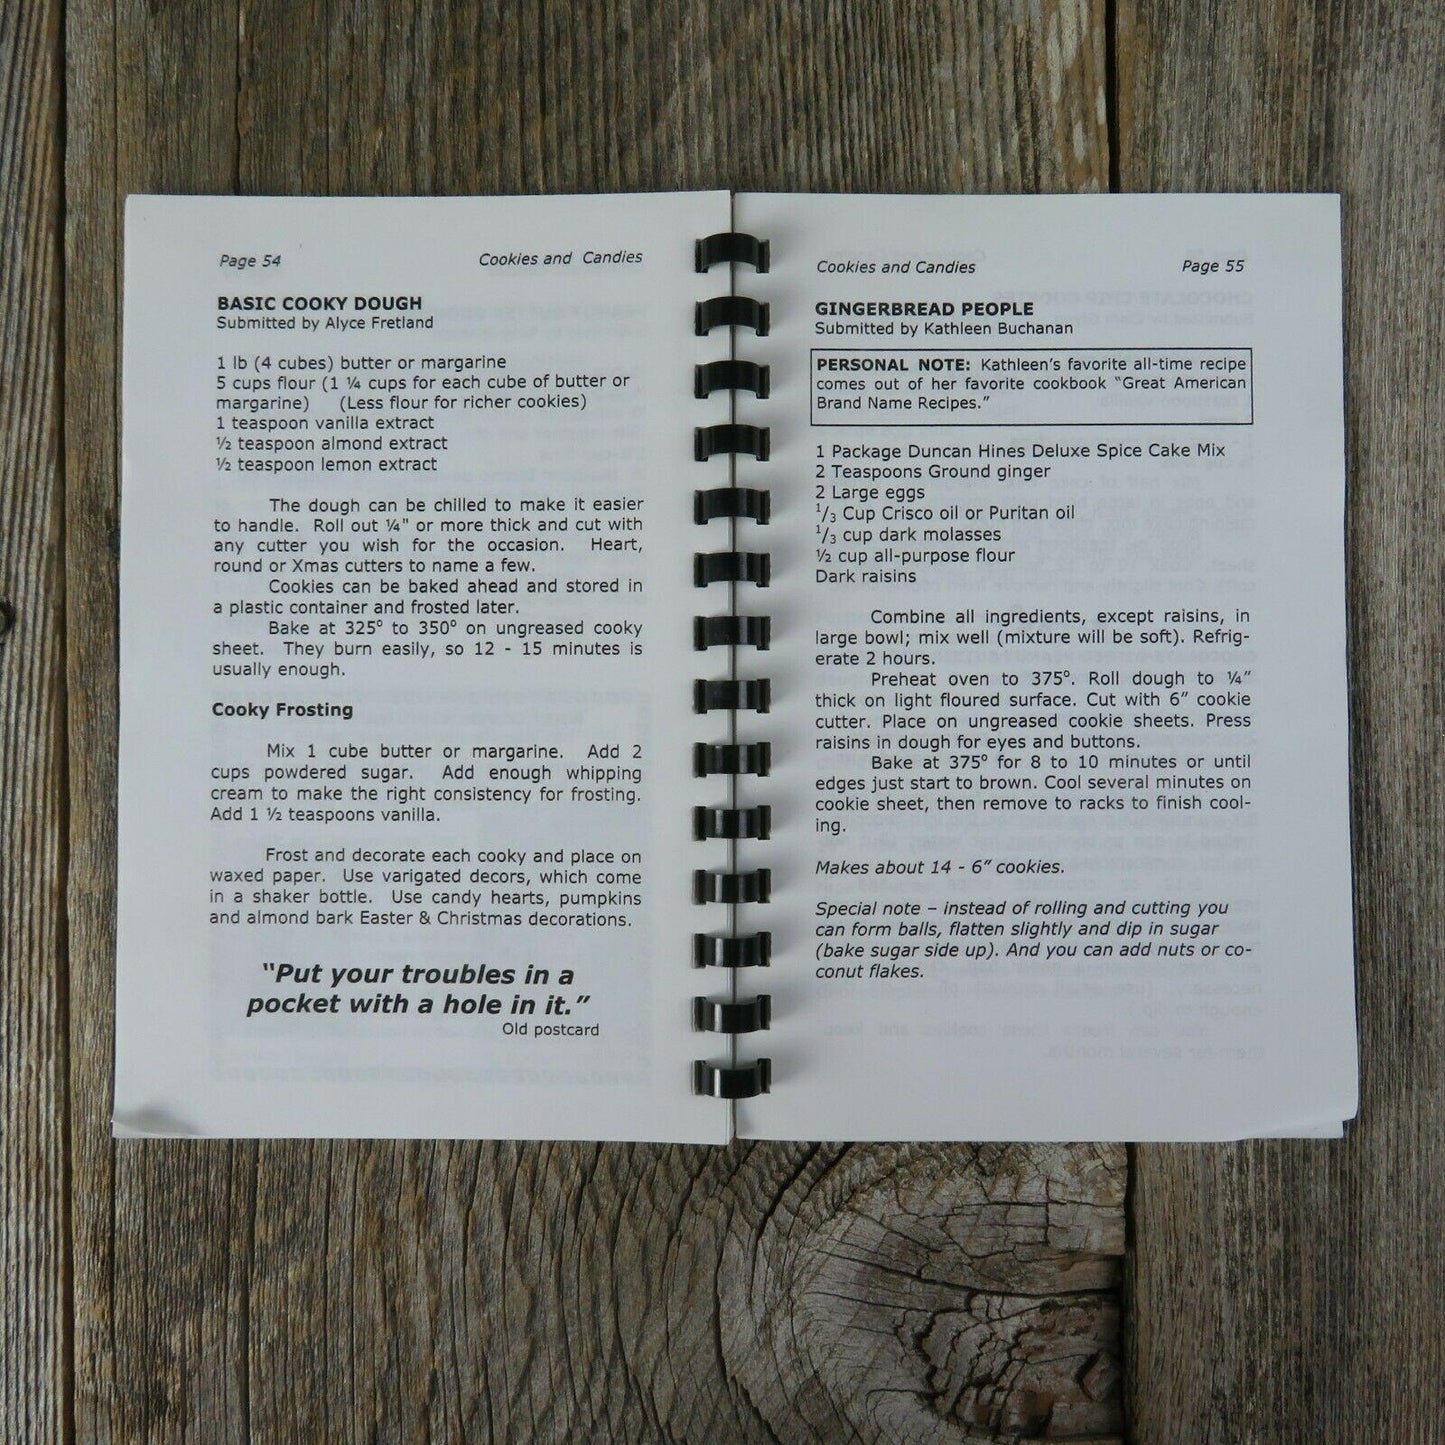 California Cookbook Eureka Salvation Army Silvercrest Humboldt Recipes 2006